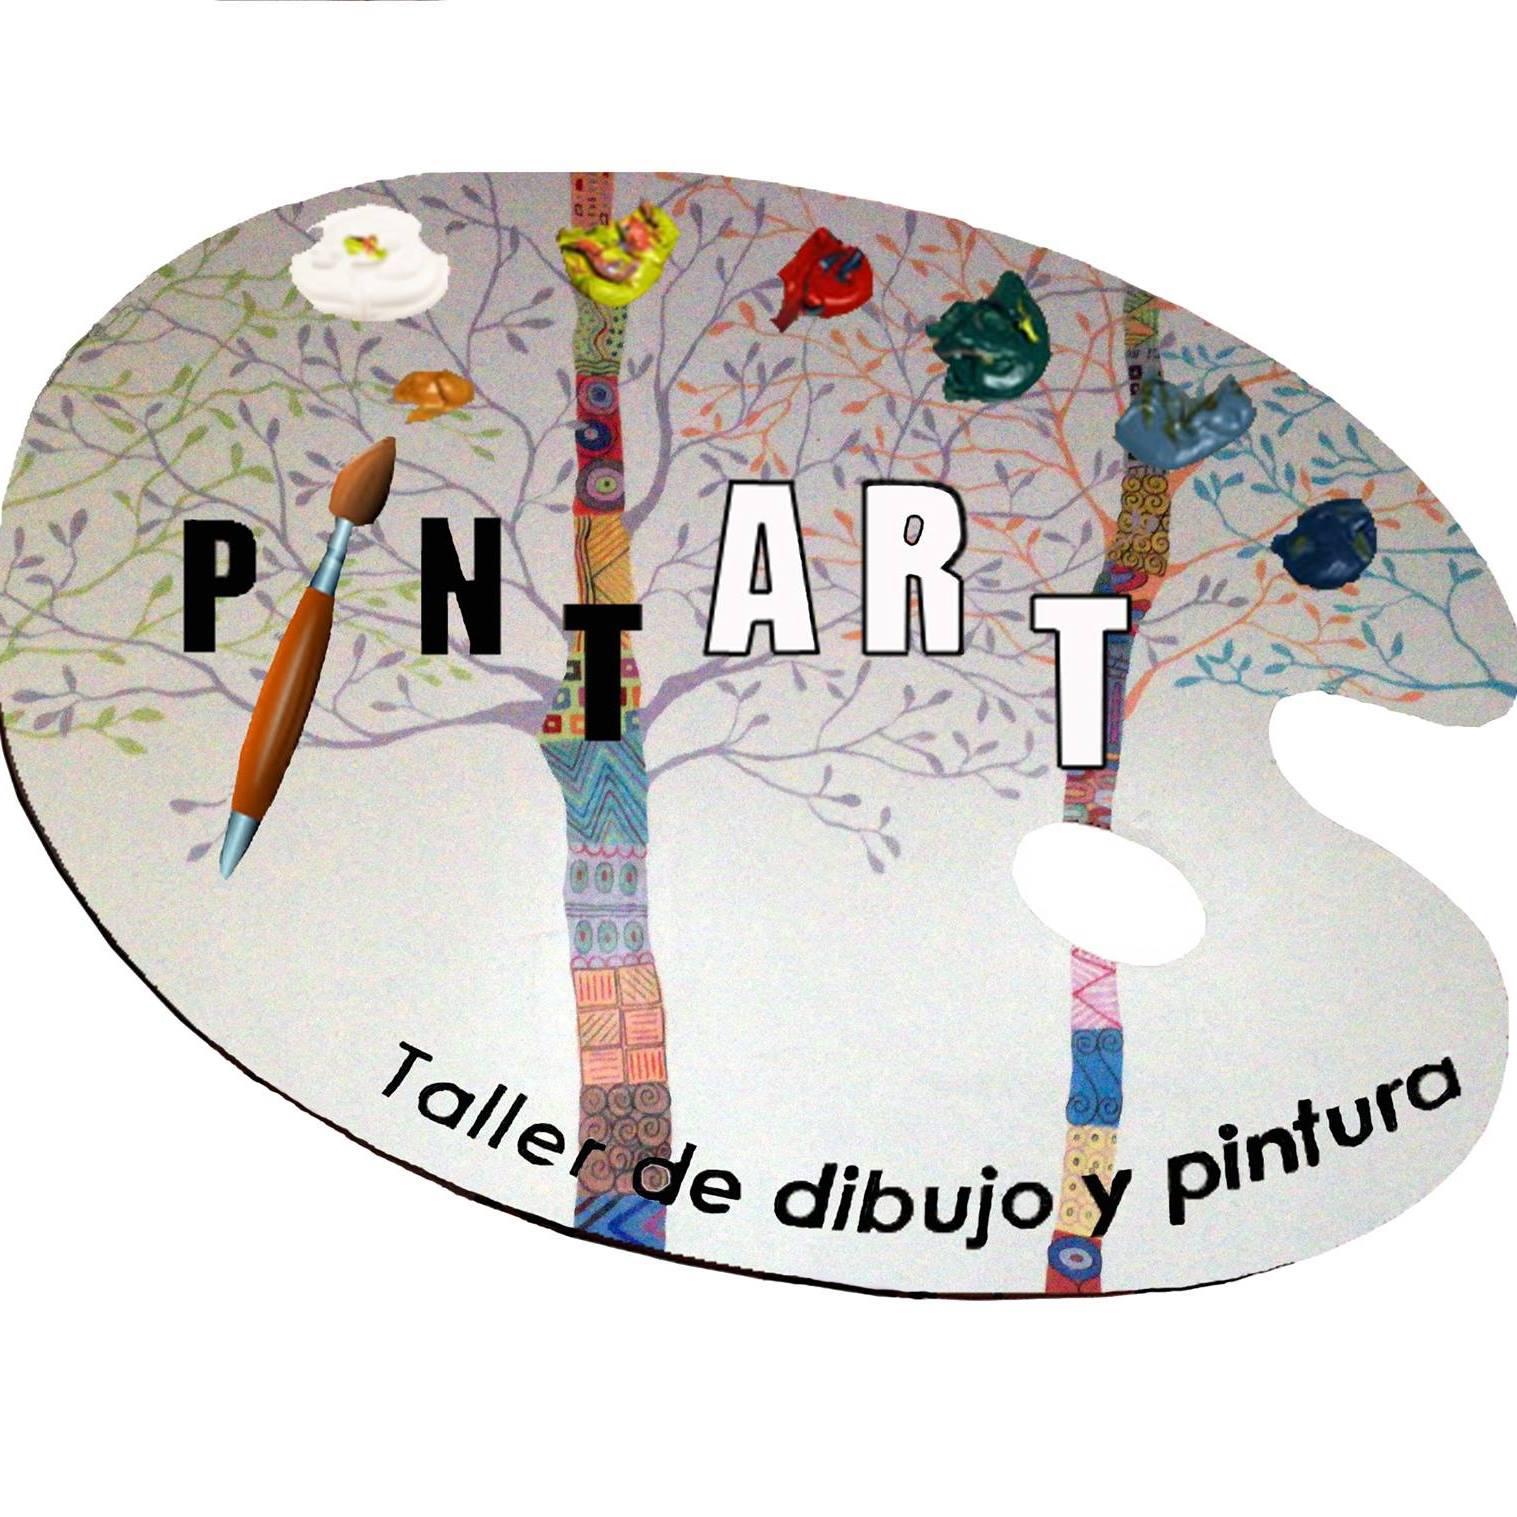 Pintart. Taller De Dibujo Y Pintura Logo